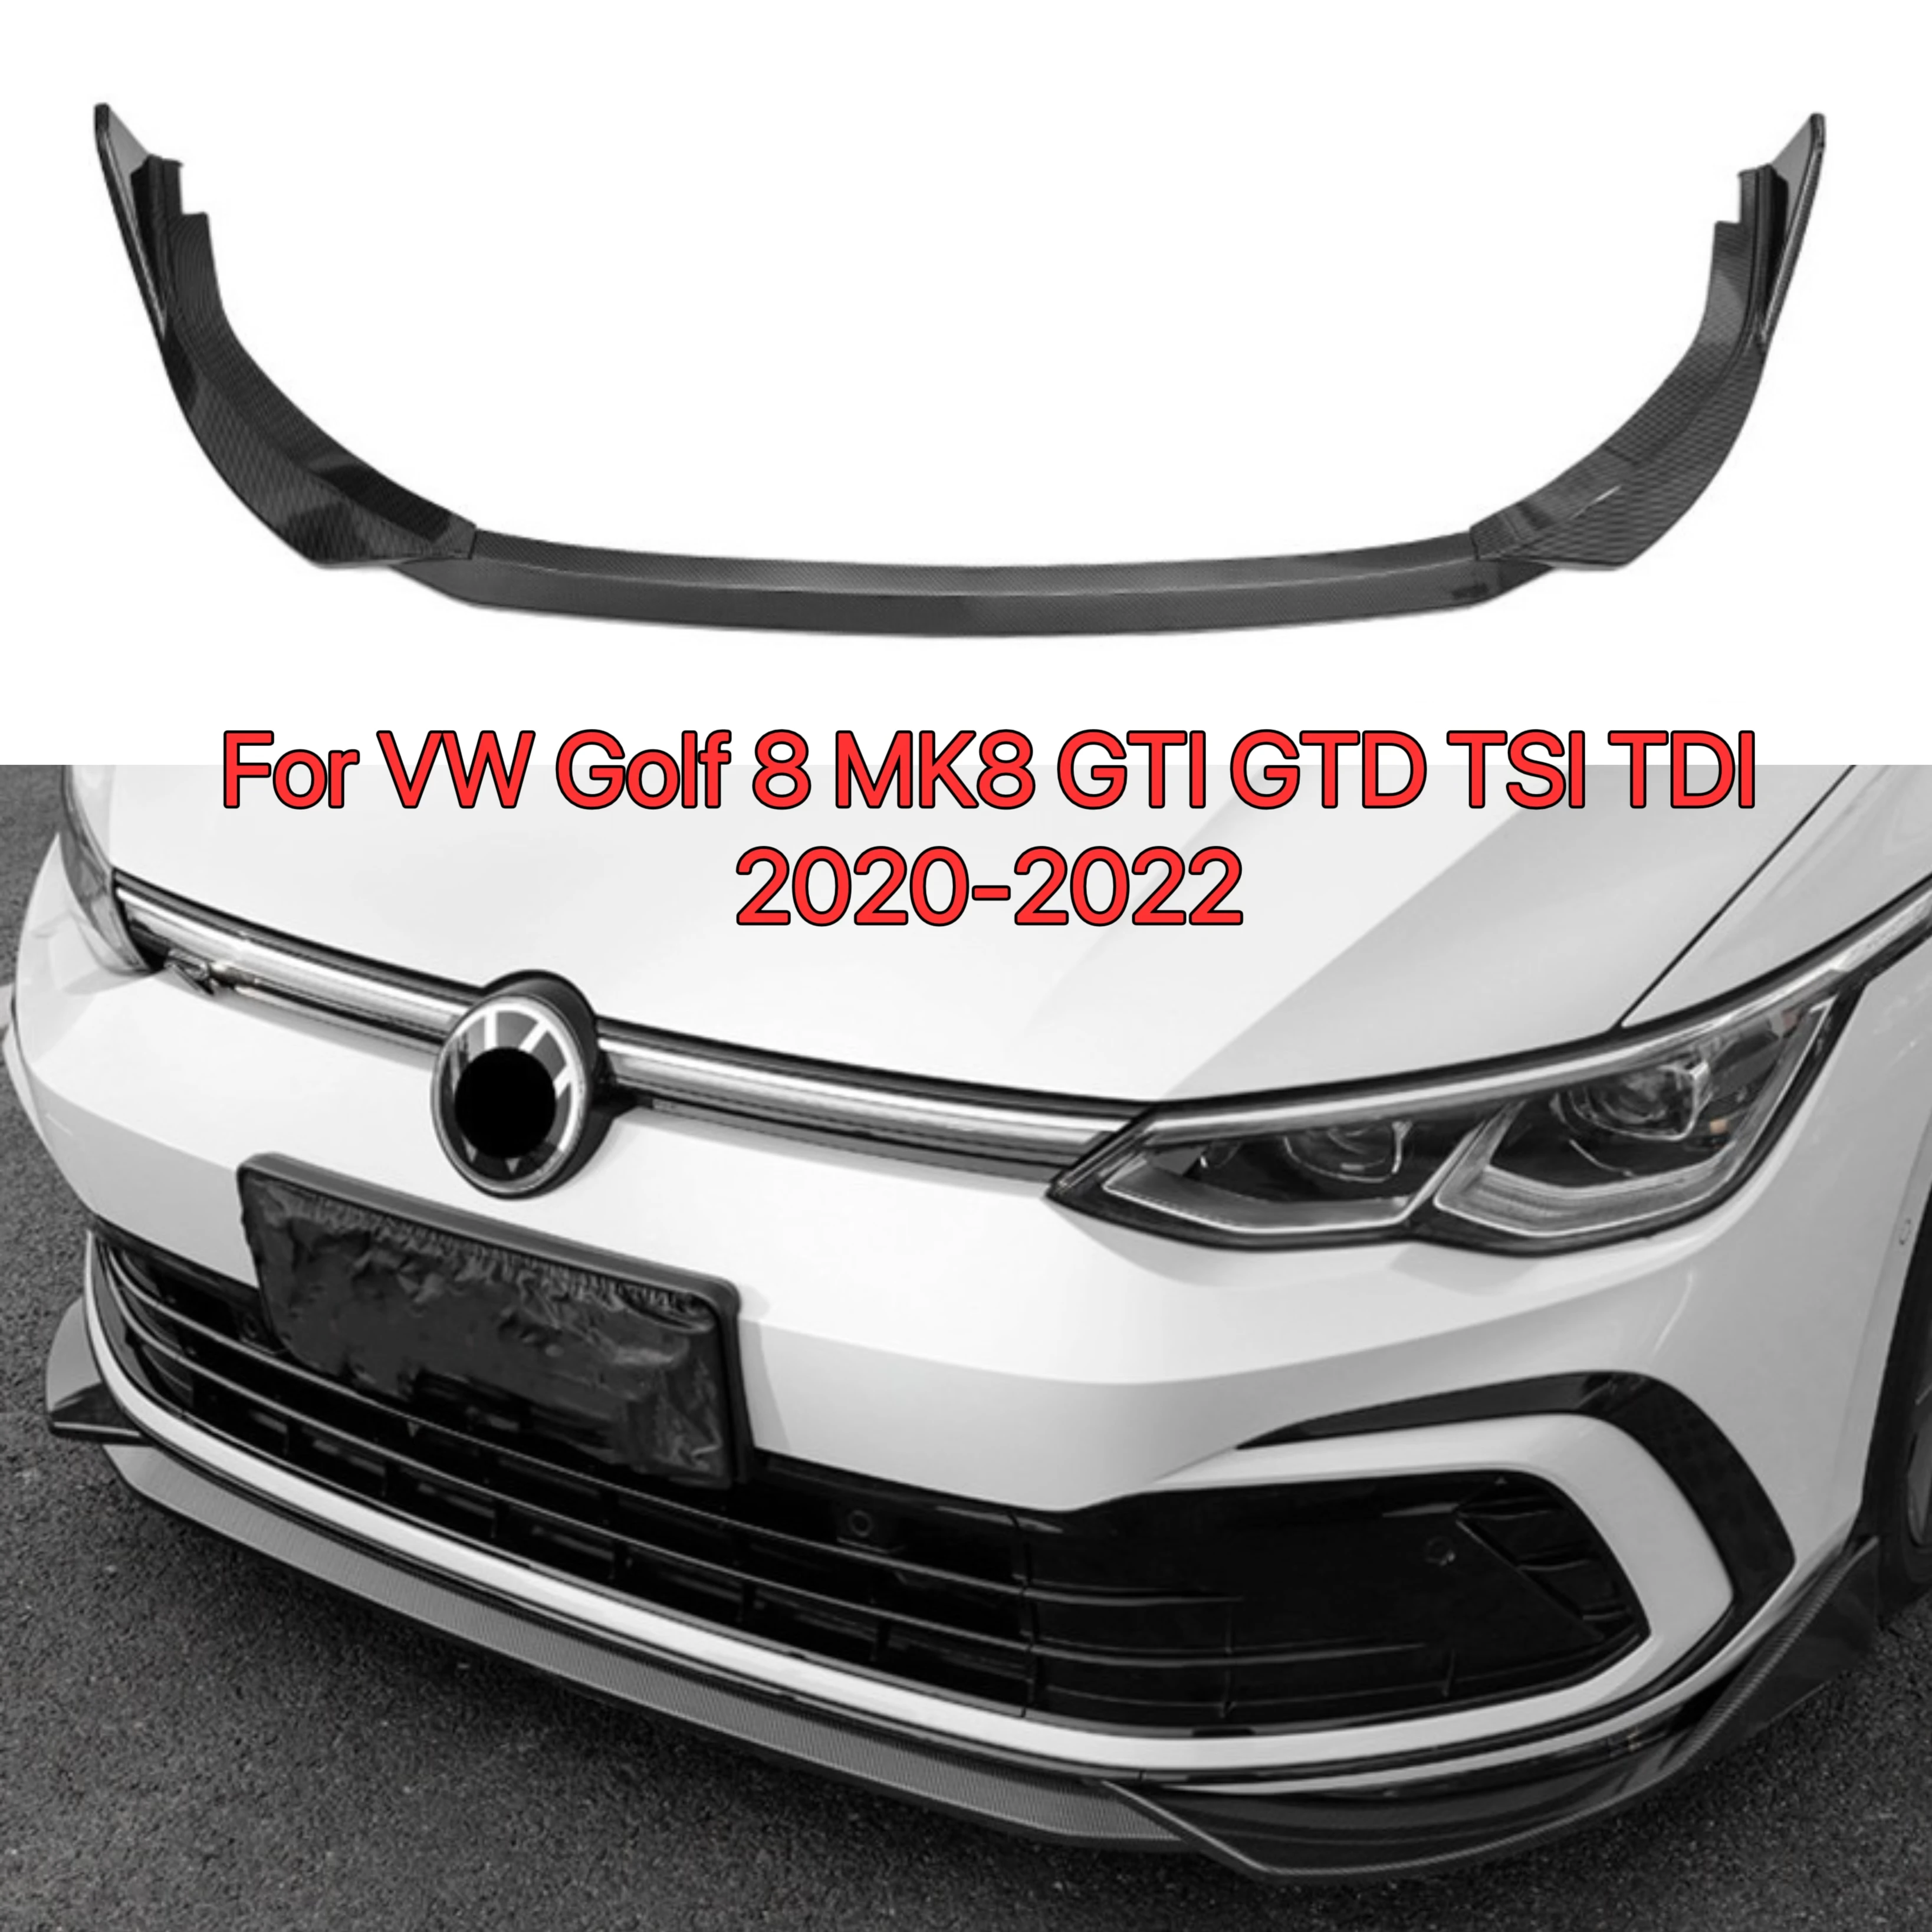 

Car Front Bumper Lip Body Kit Spoiler Canard Splitter Diffuser For VW Golf 8 MK8 GTI GTD GTE R-LINE TSI TDI 2020-2022 Tuning